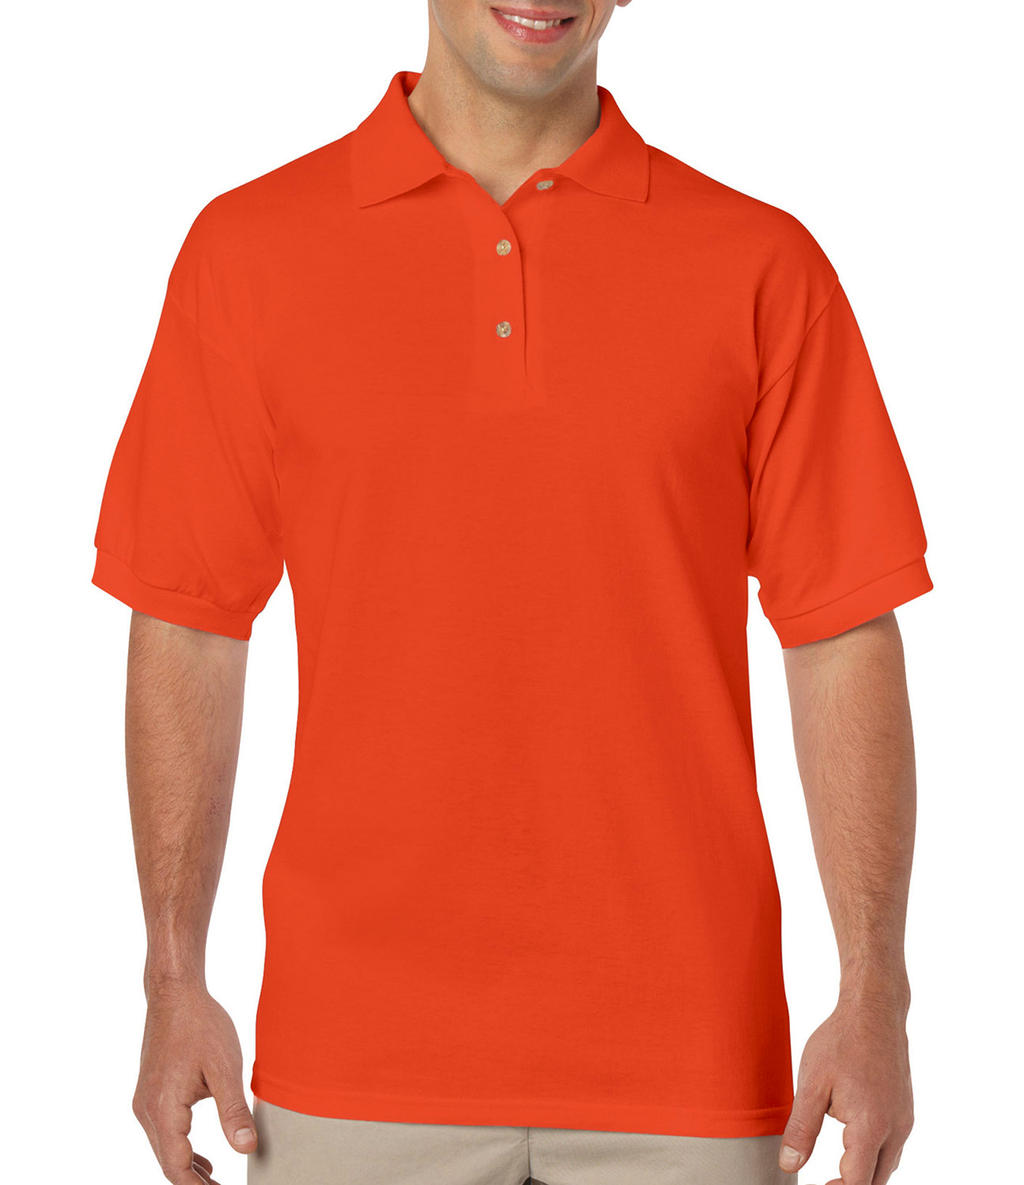  DryBlend Adult Jersey Polo in Farbe Orange